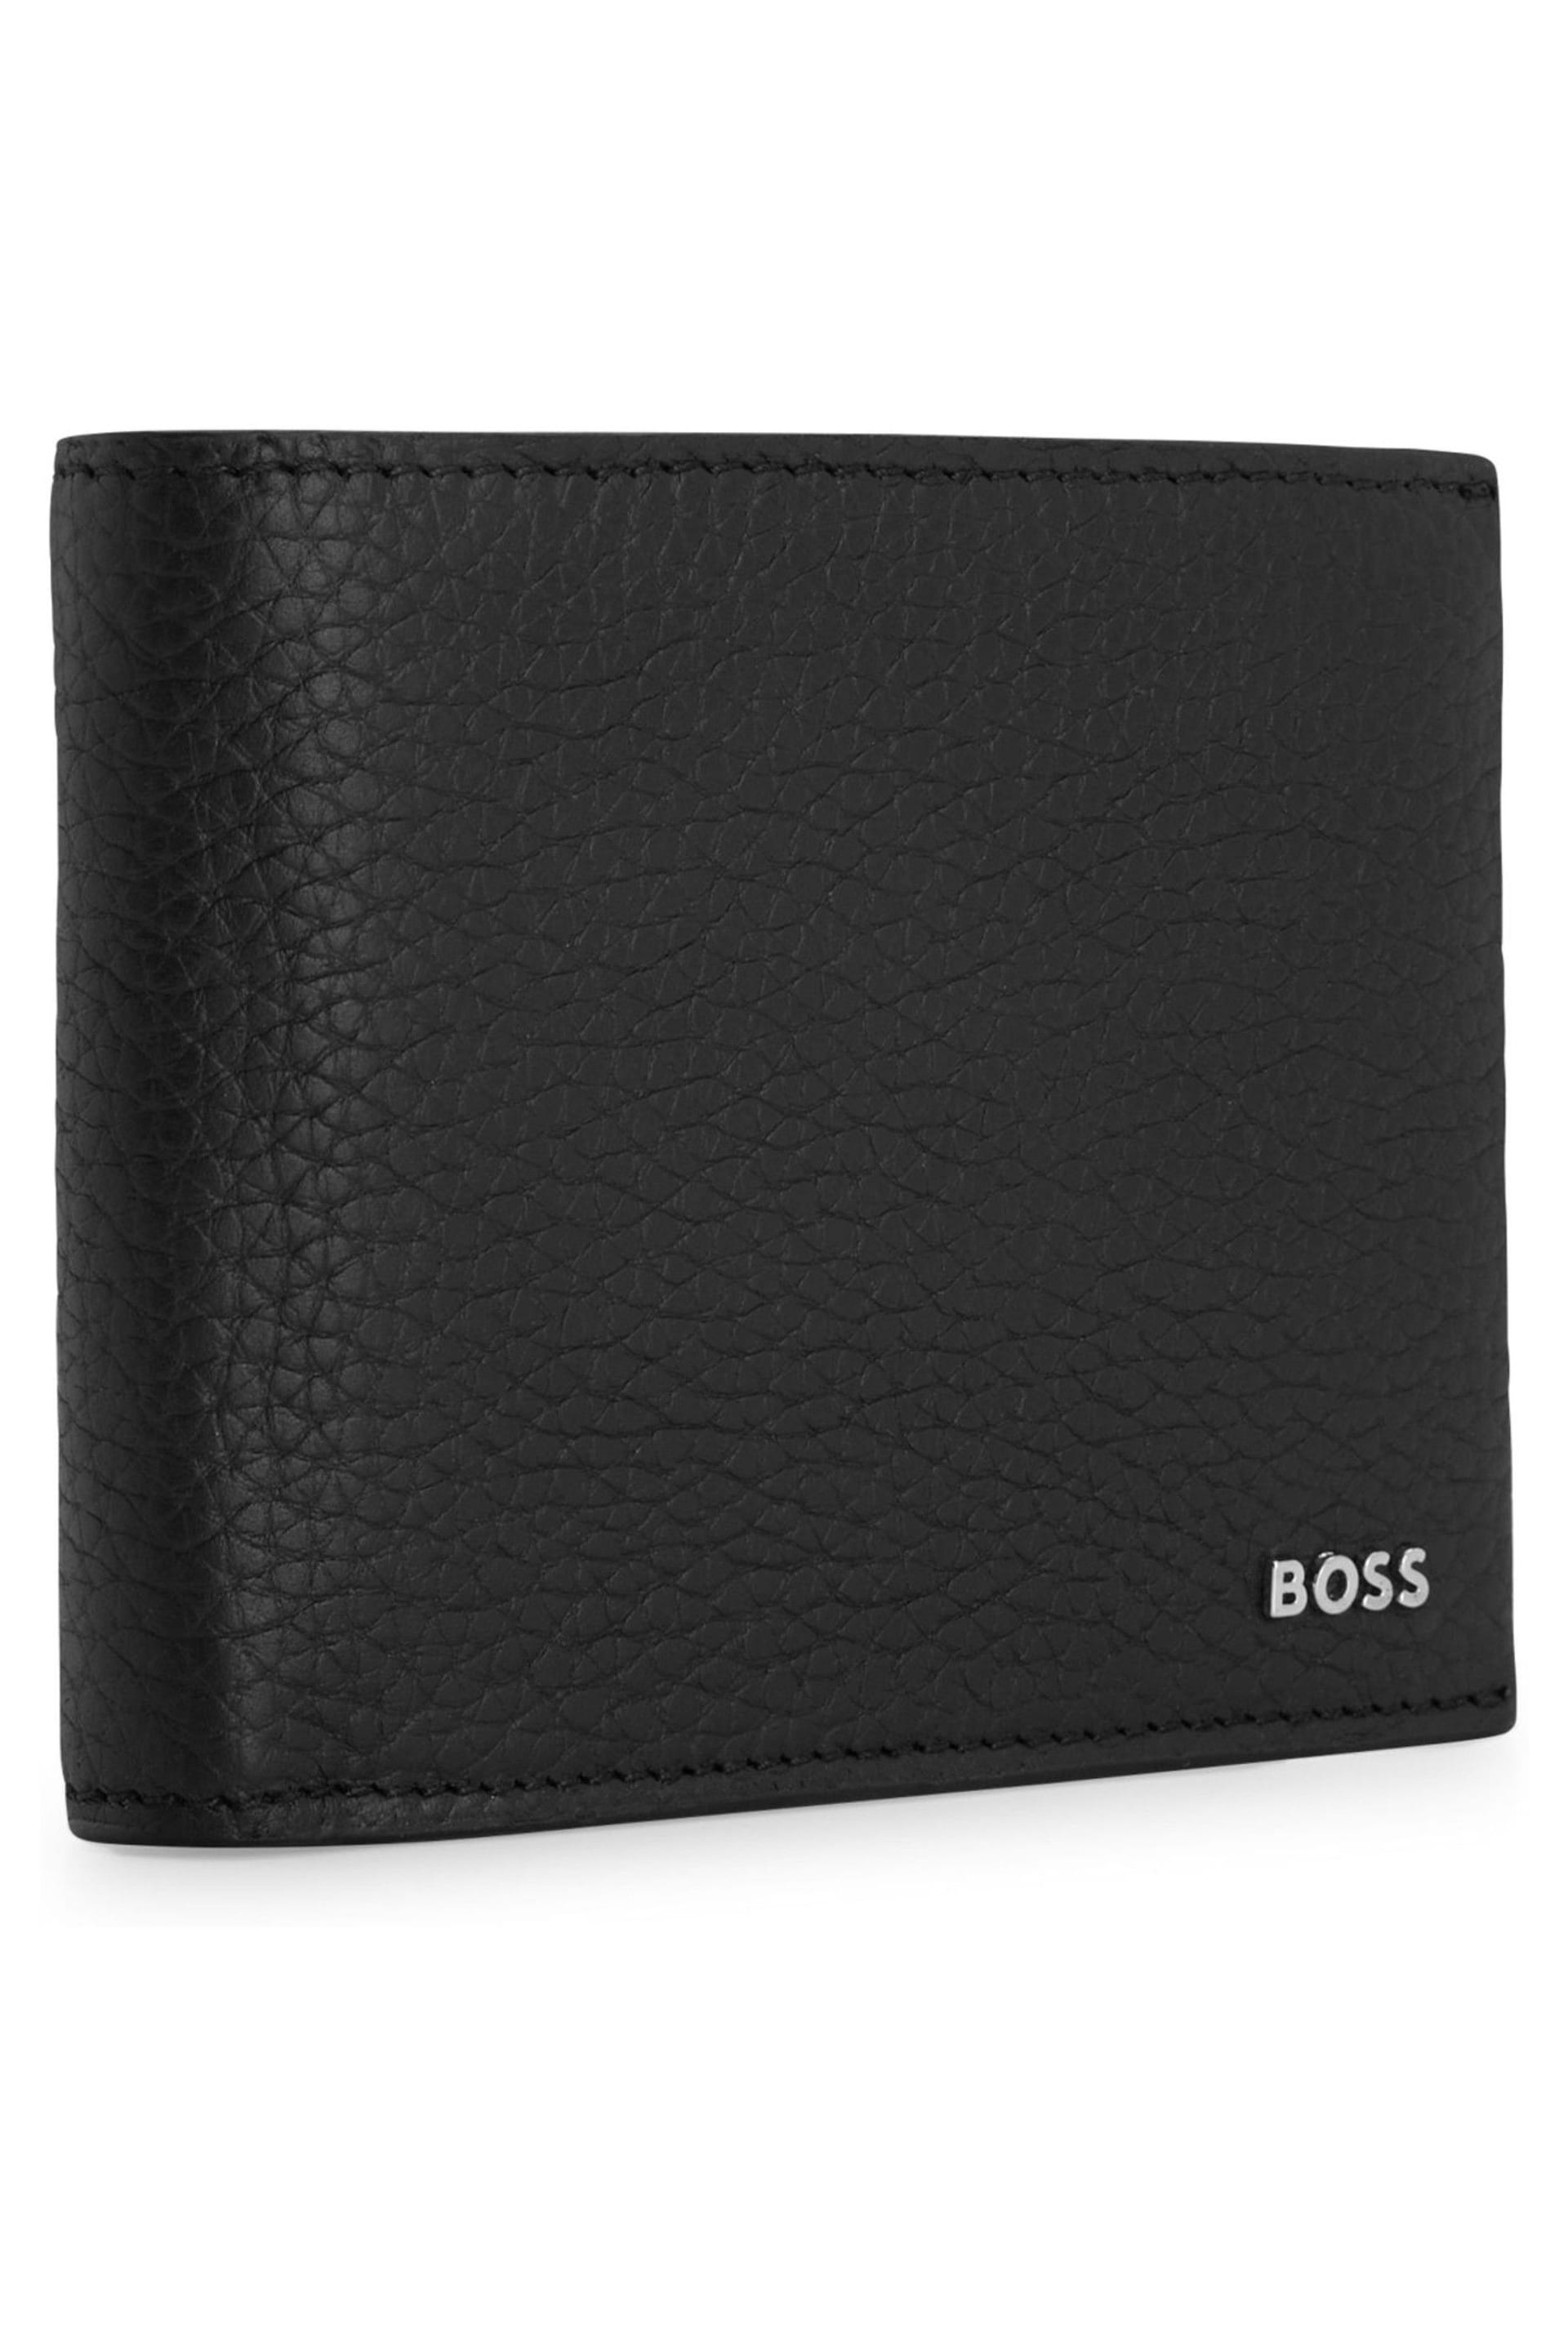 BOSS Black Crosstown Trifold Wallet - Image 2 of 4